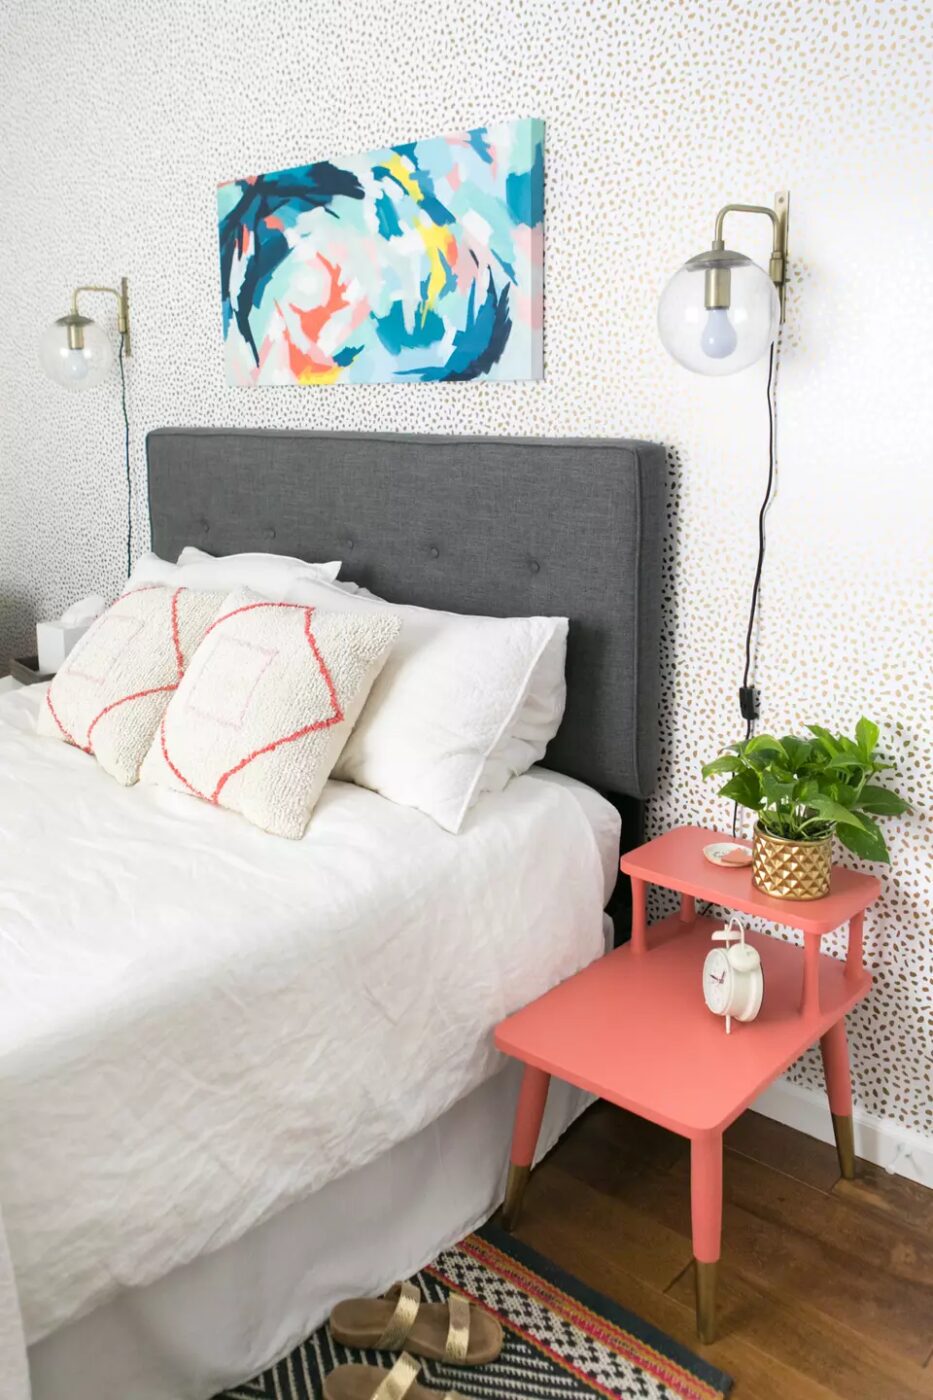 DIY bedroom decor projects